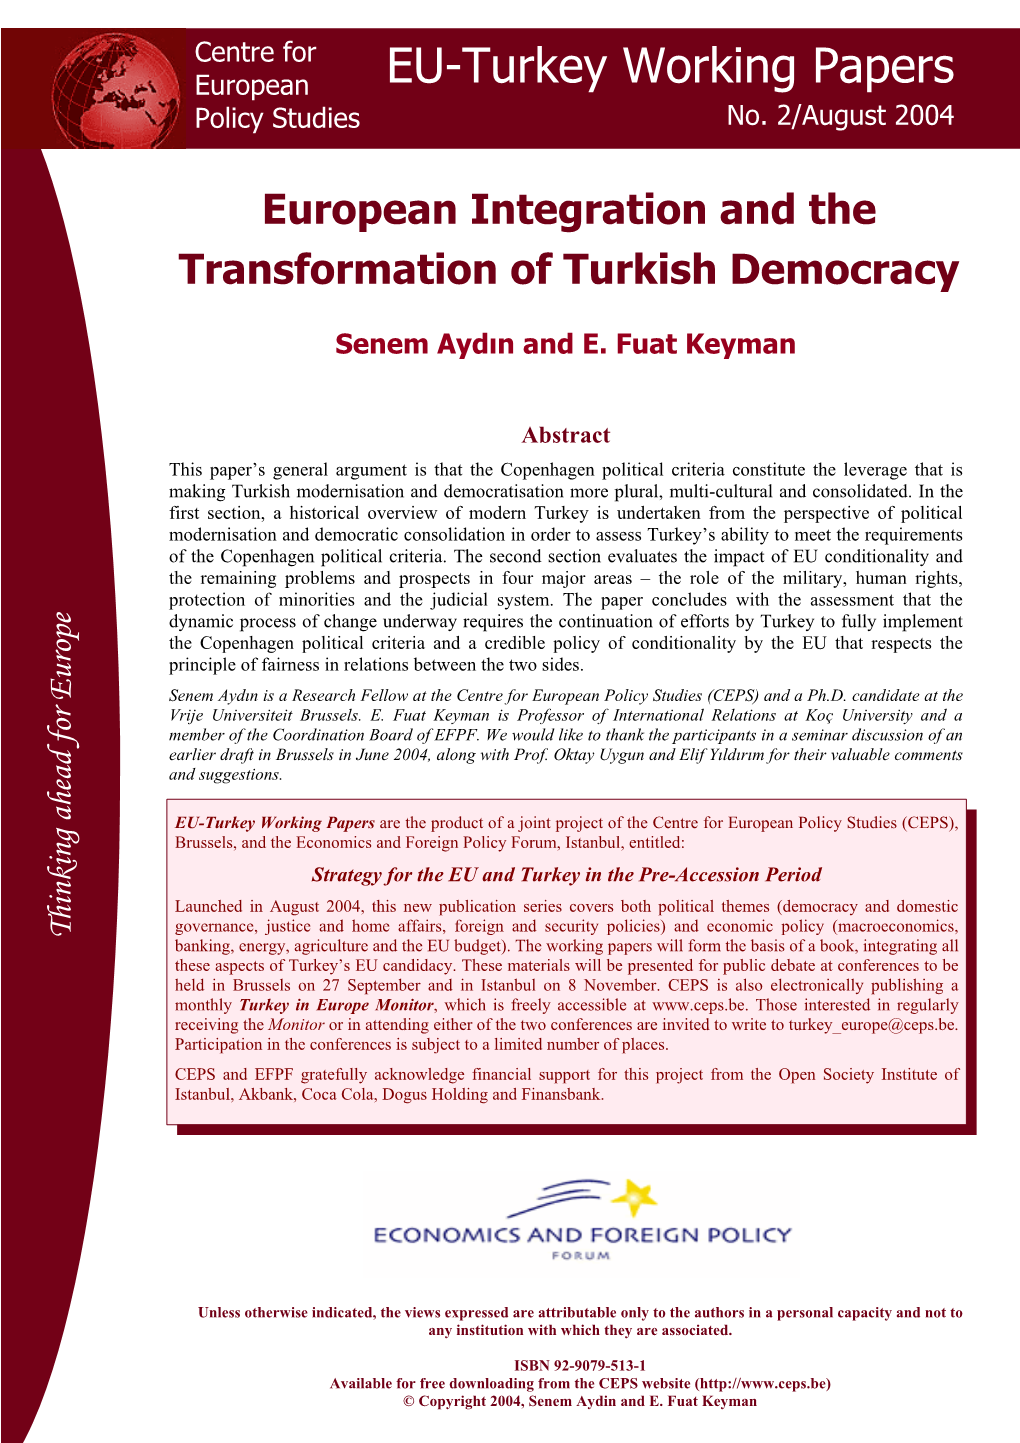 EU-Turkey Working Papers Policy Studies No